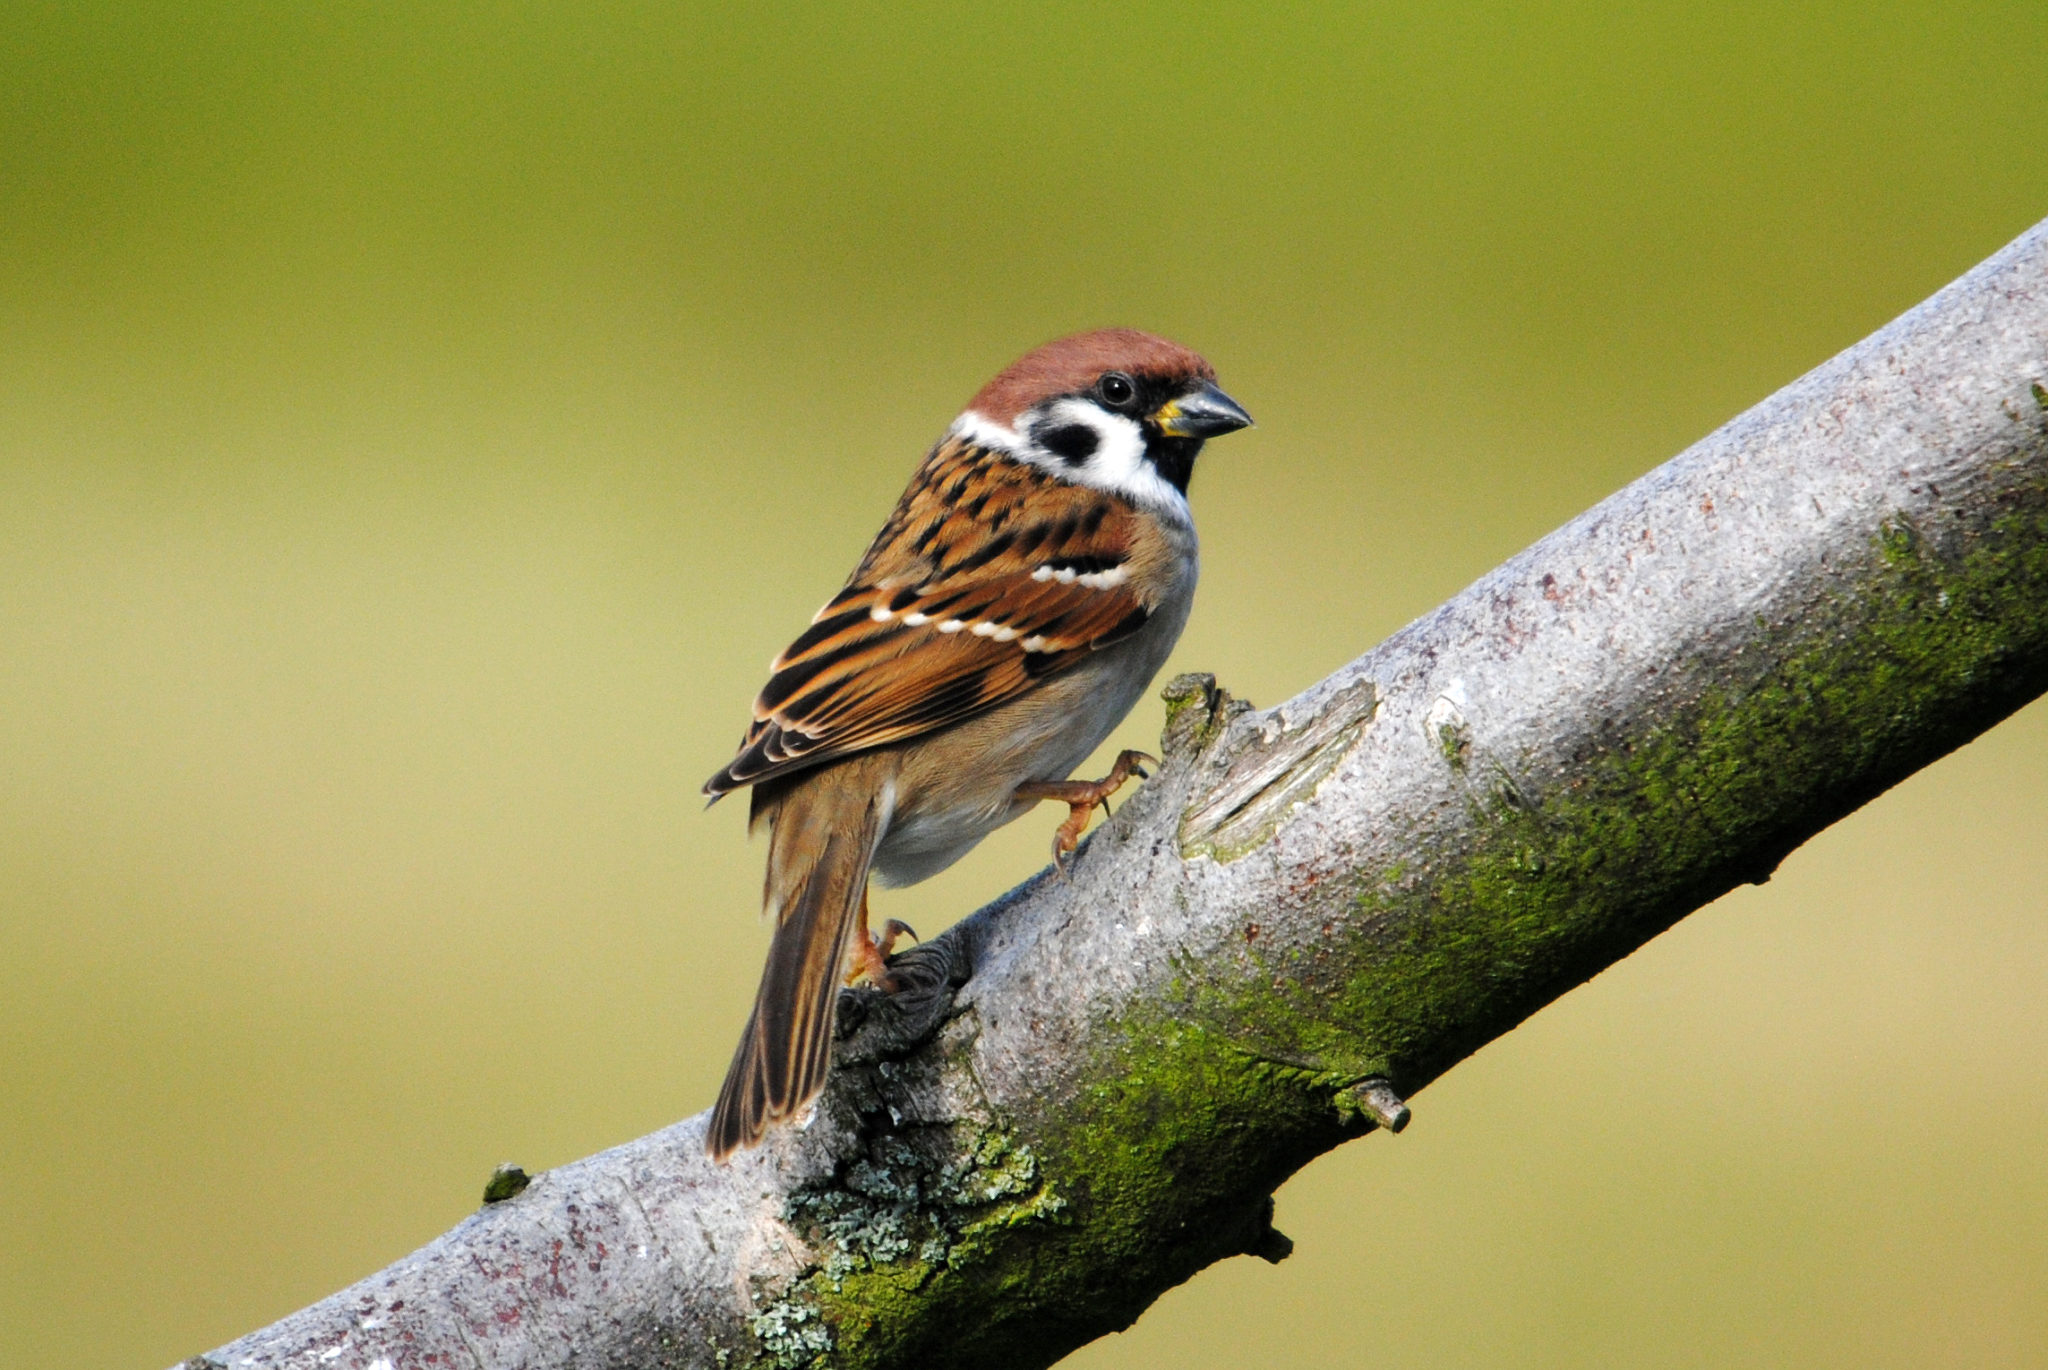 House sparrow vs tree sparrow | Wildlife blog | Scottish Wildlife Trust